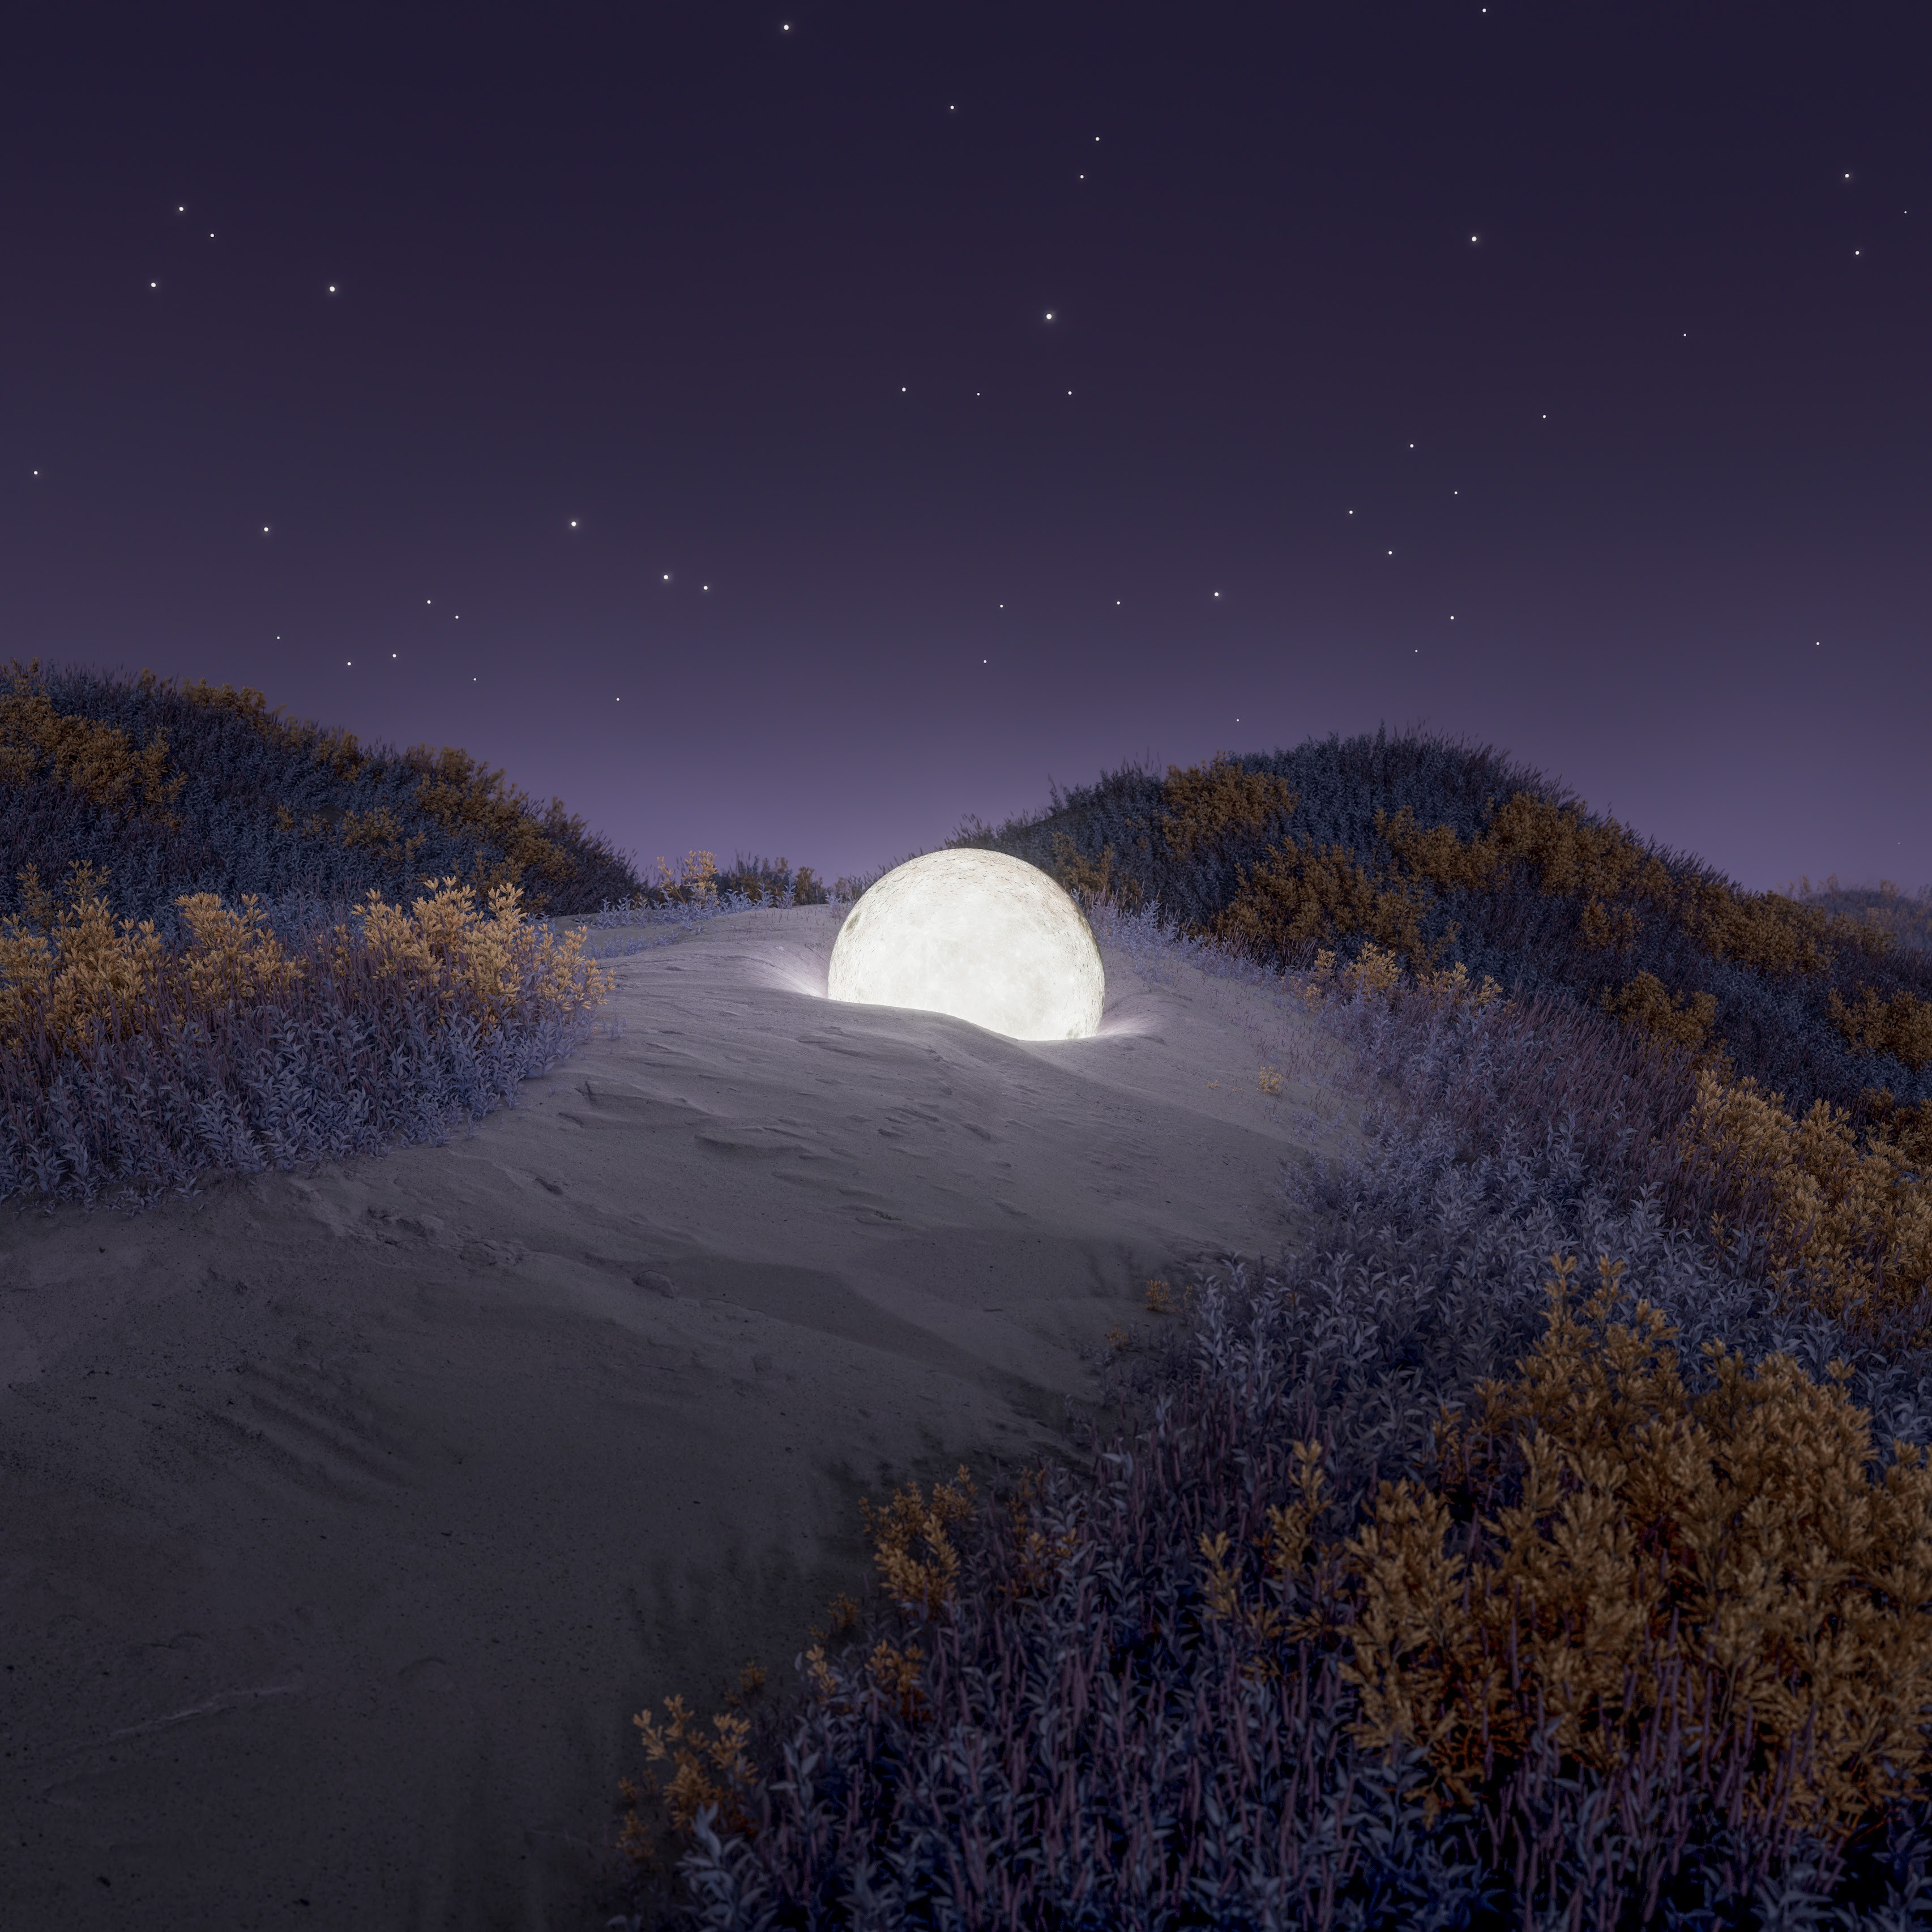 General 3412x3412 landscape nature desert digital art CGI nightscape night flowers plants stars Moon